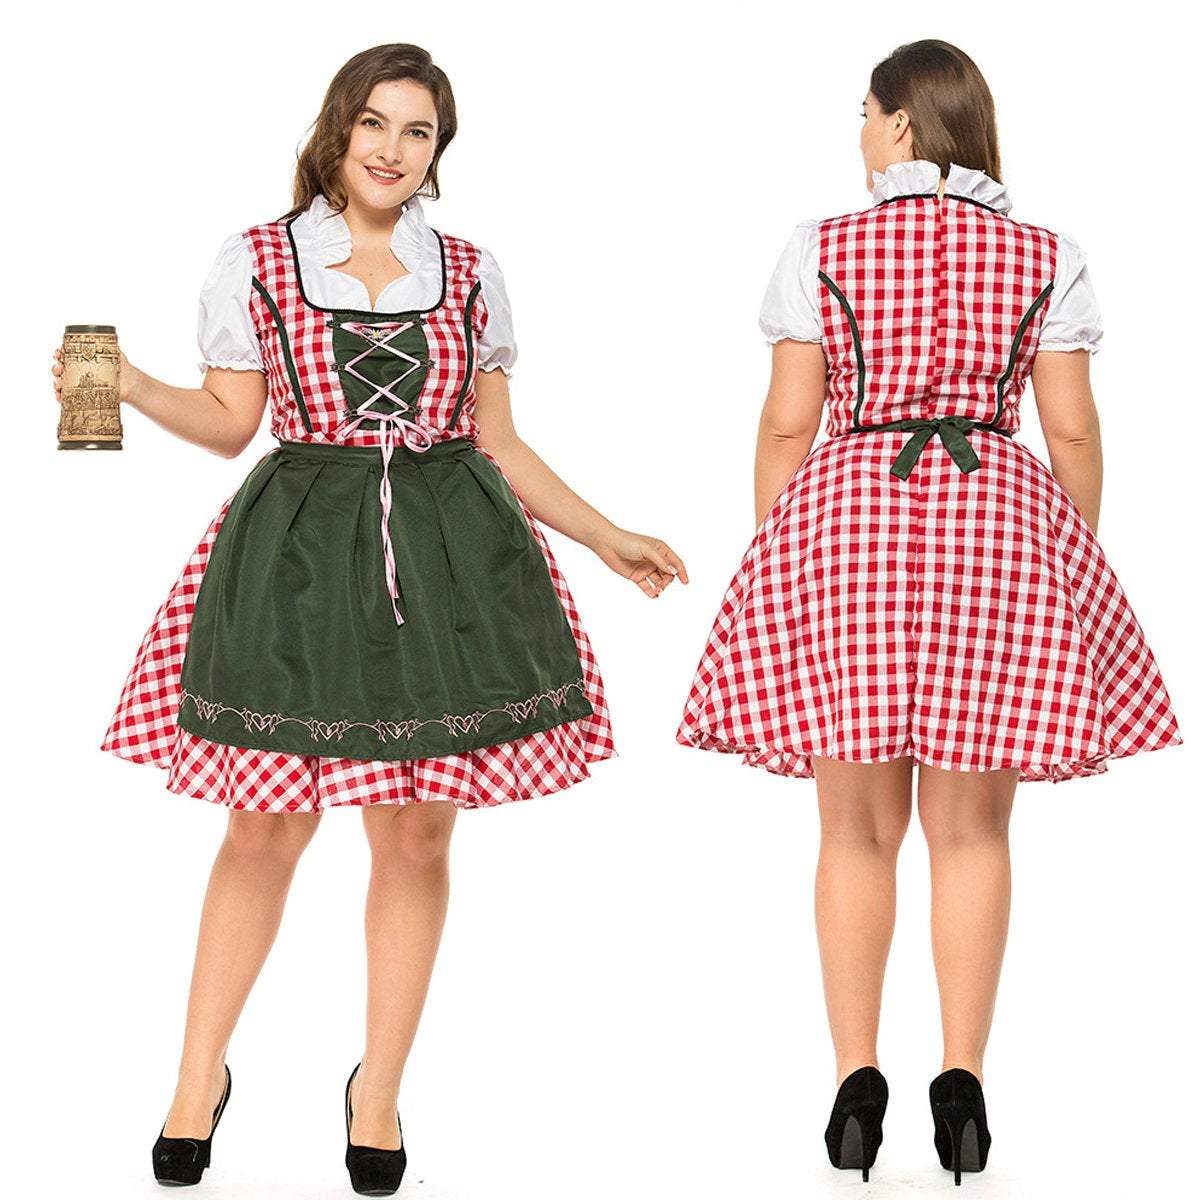 Plus Size Women German Beer Oktoberfest Outfit Halloween Cosplay Costume